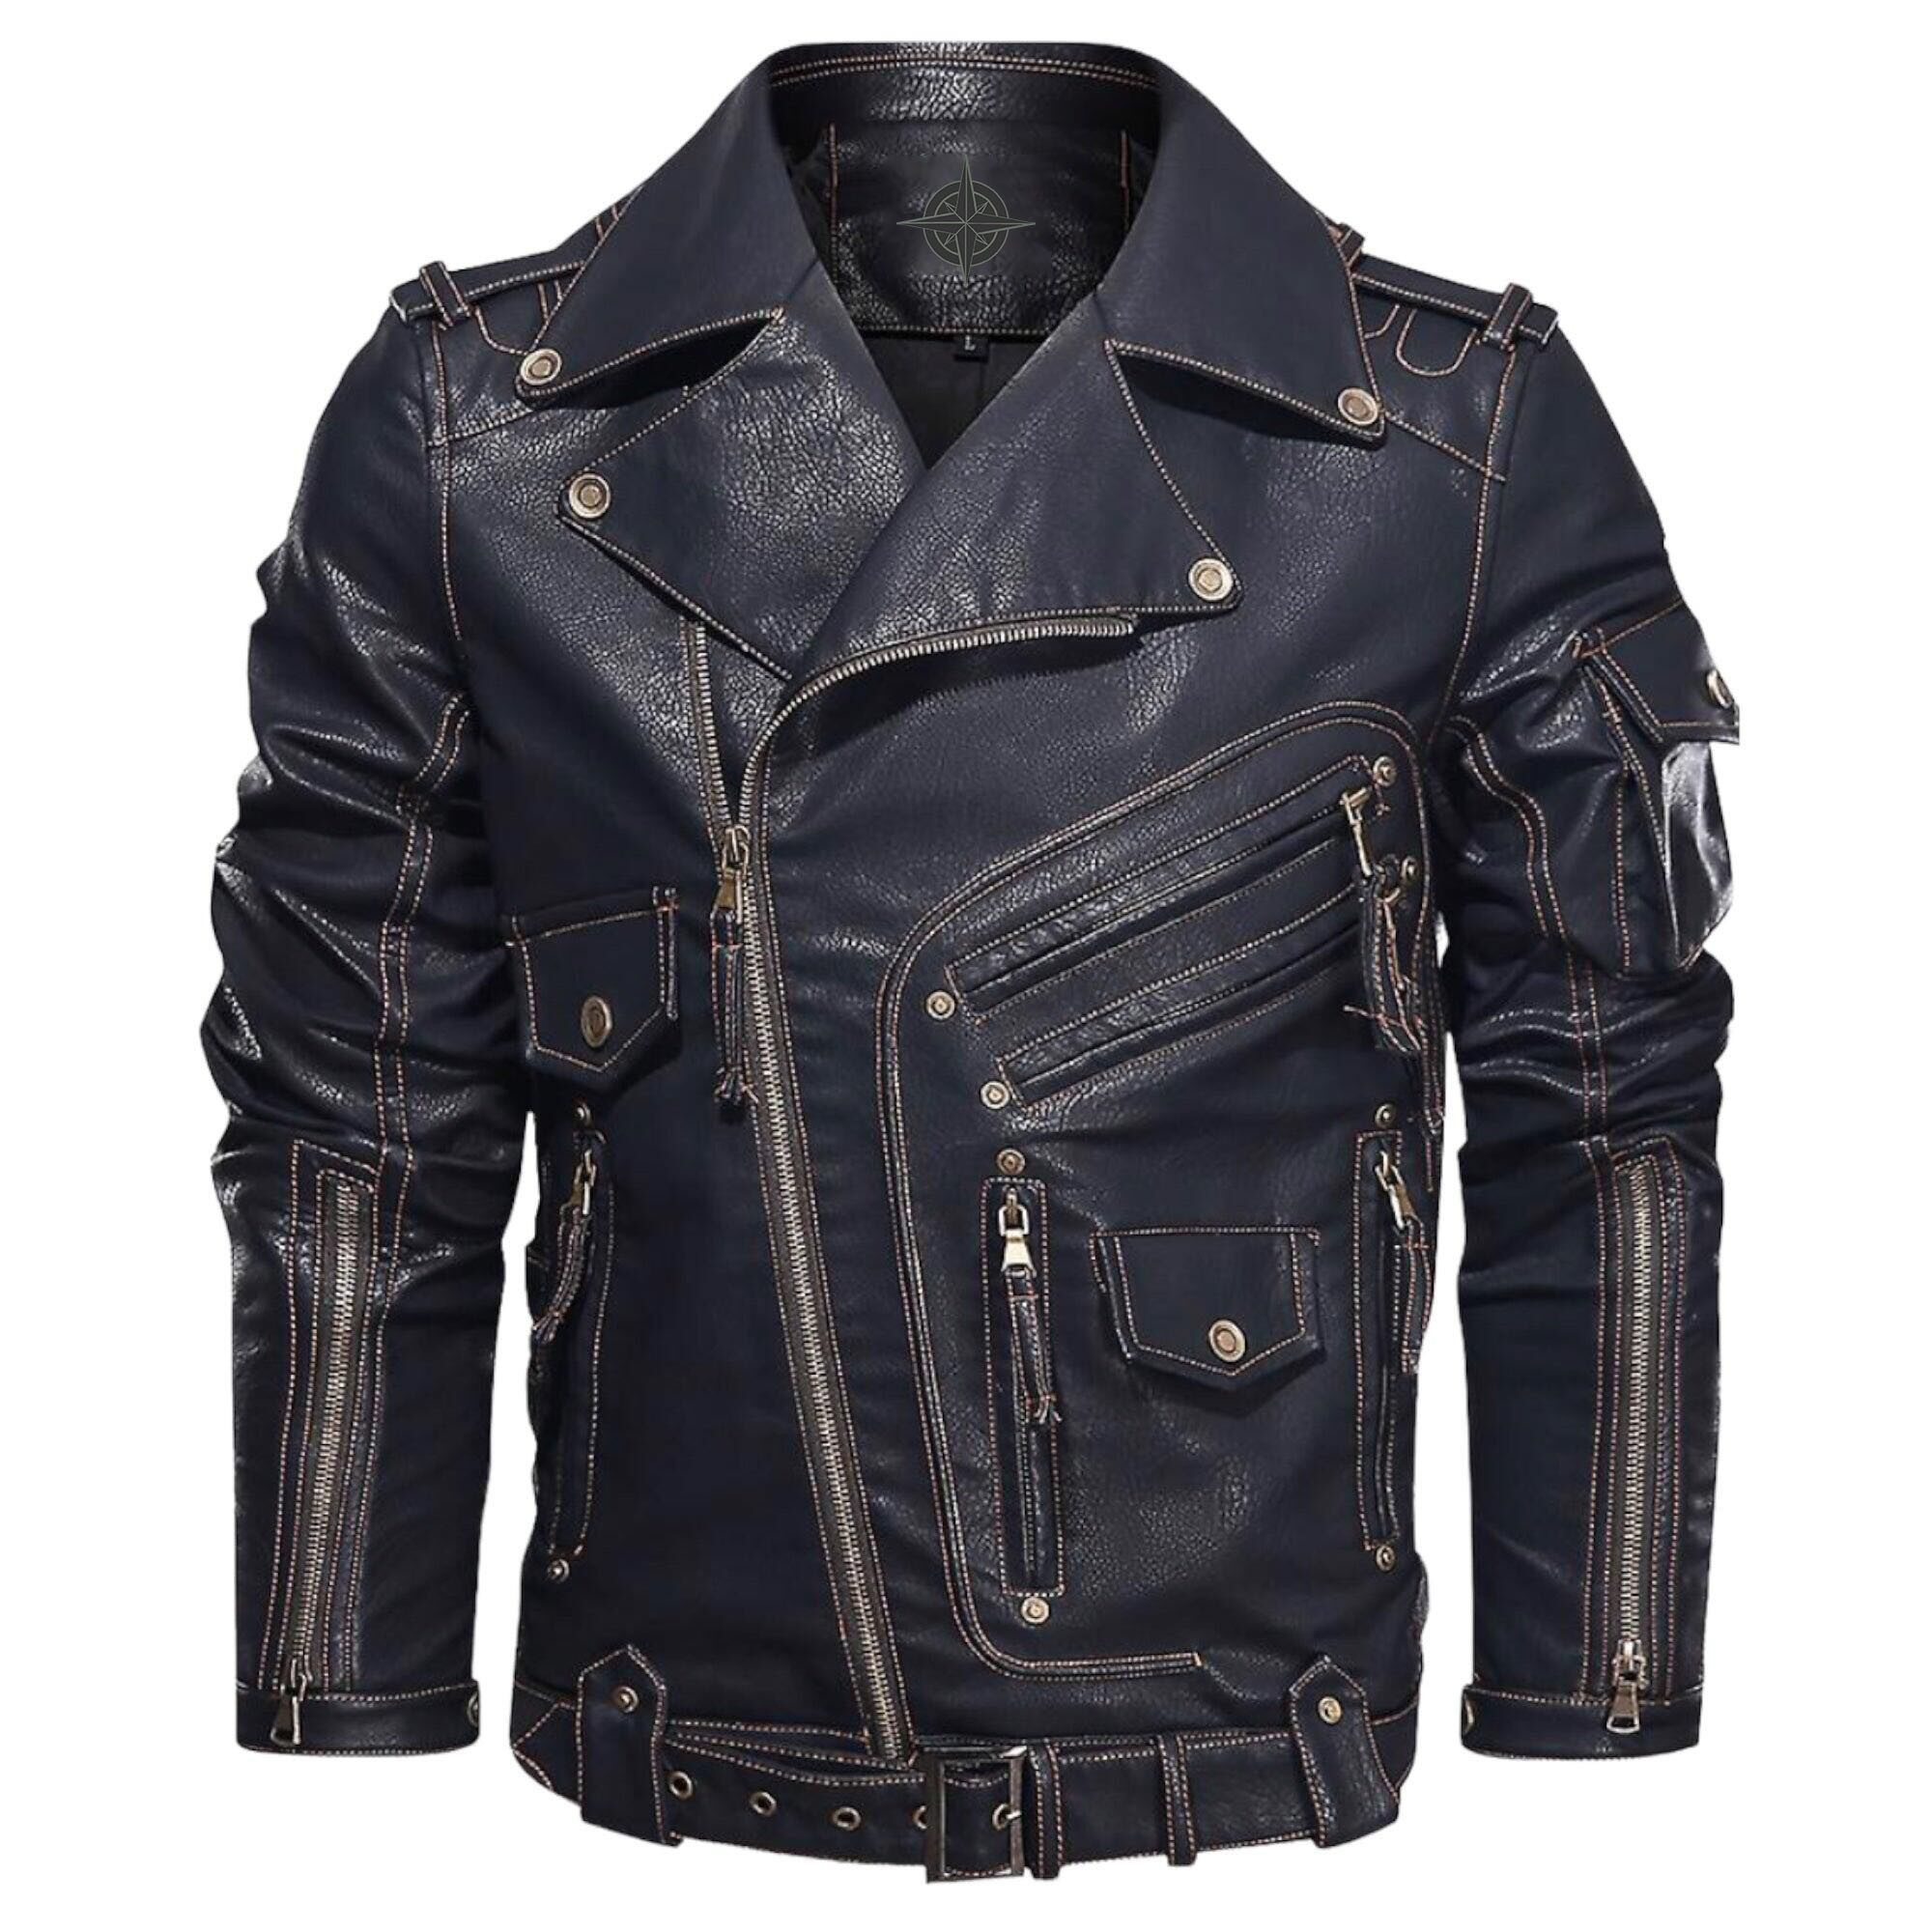 'Mystic' Leather Jacket